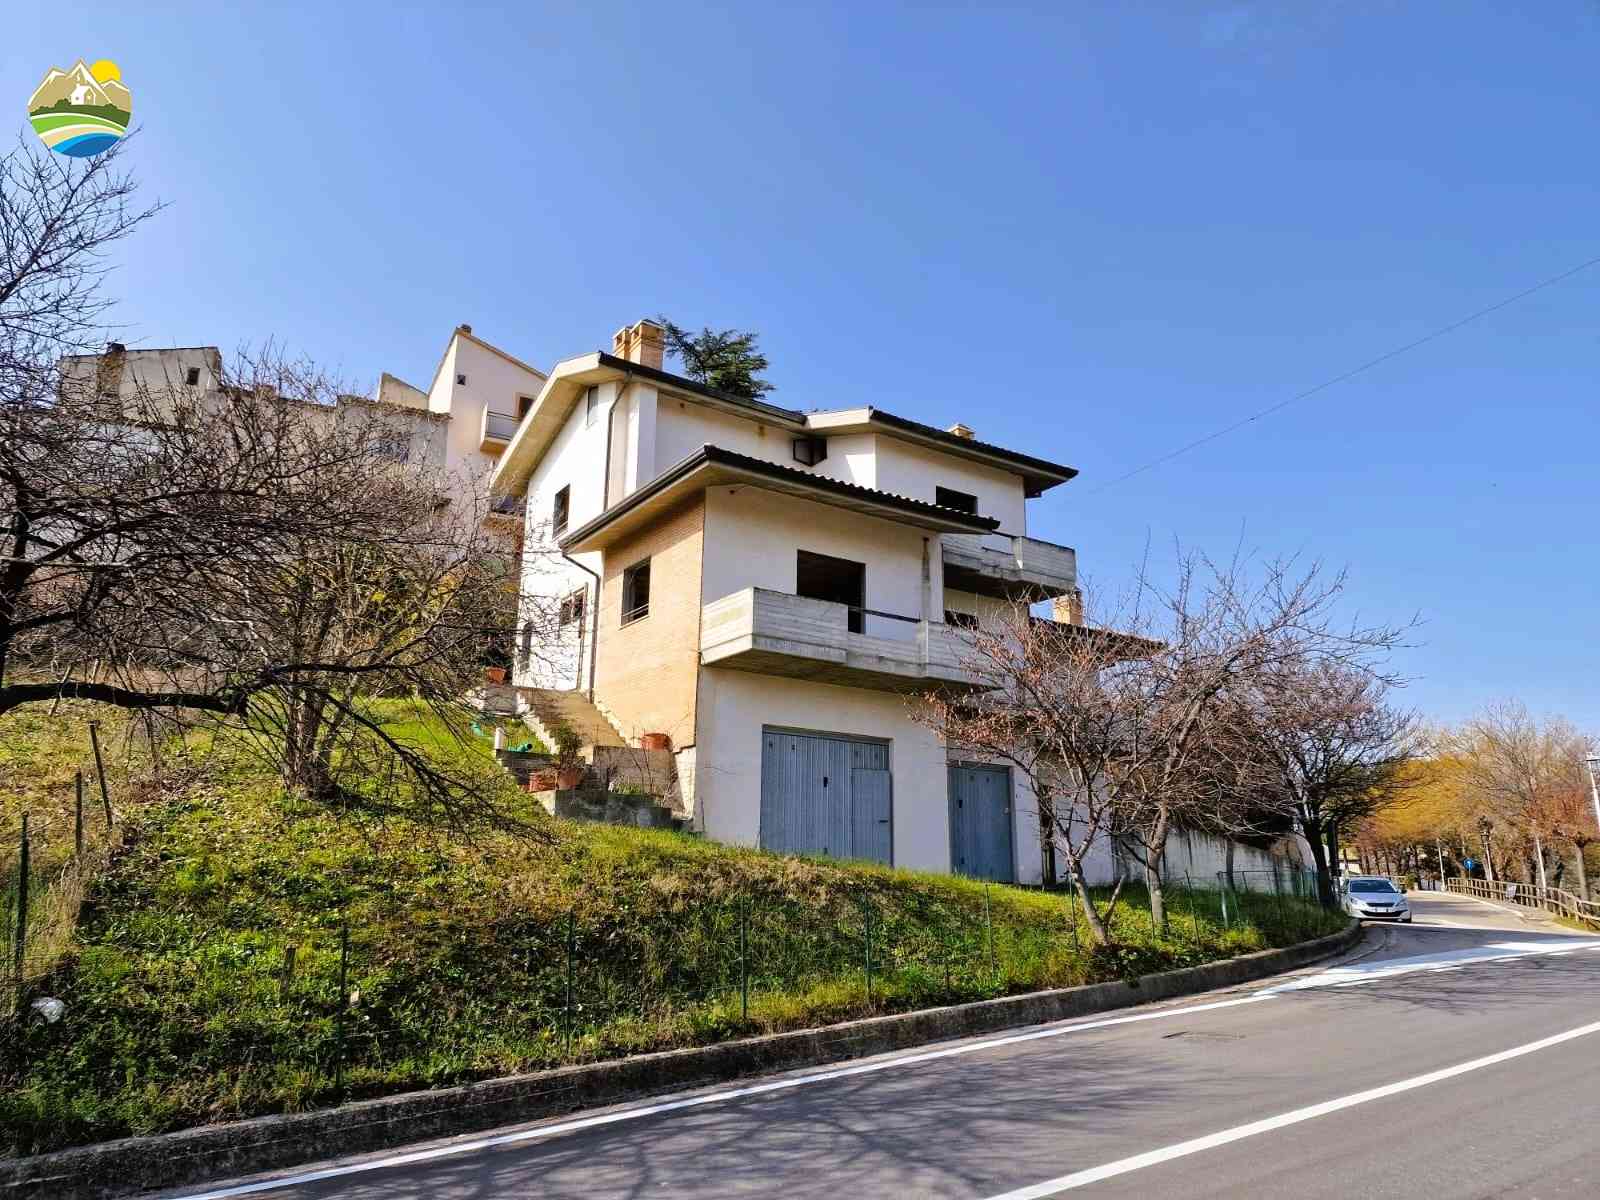 Villa Villa in vendita Castilenti (TE), Villa Mandorlo - Castilenti - EUR 129.450 730